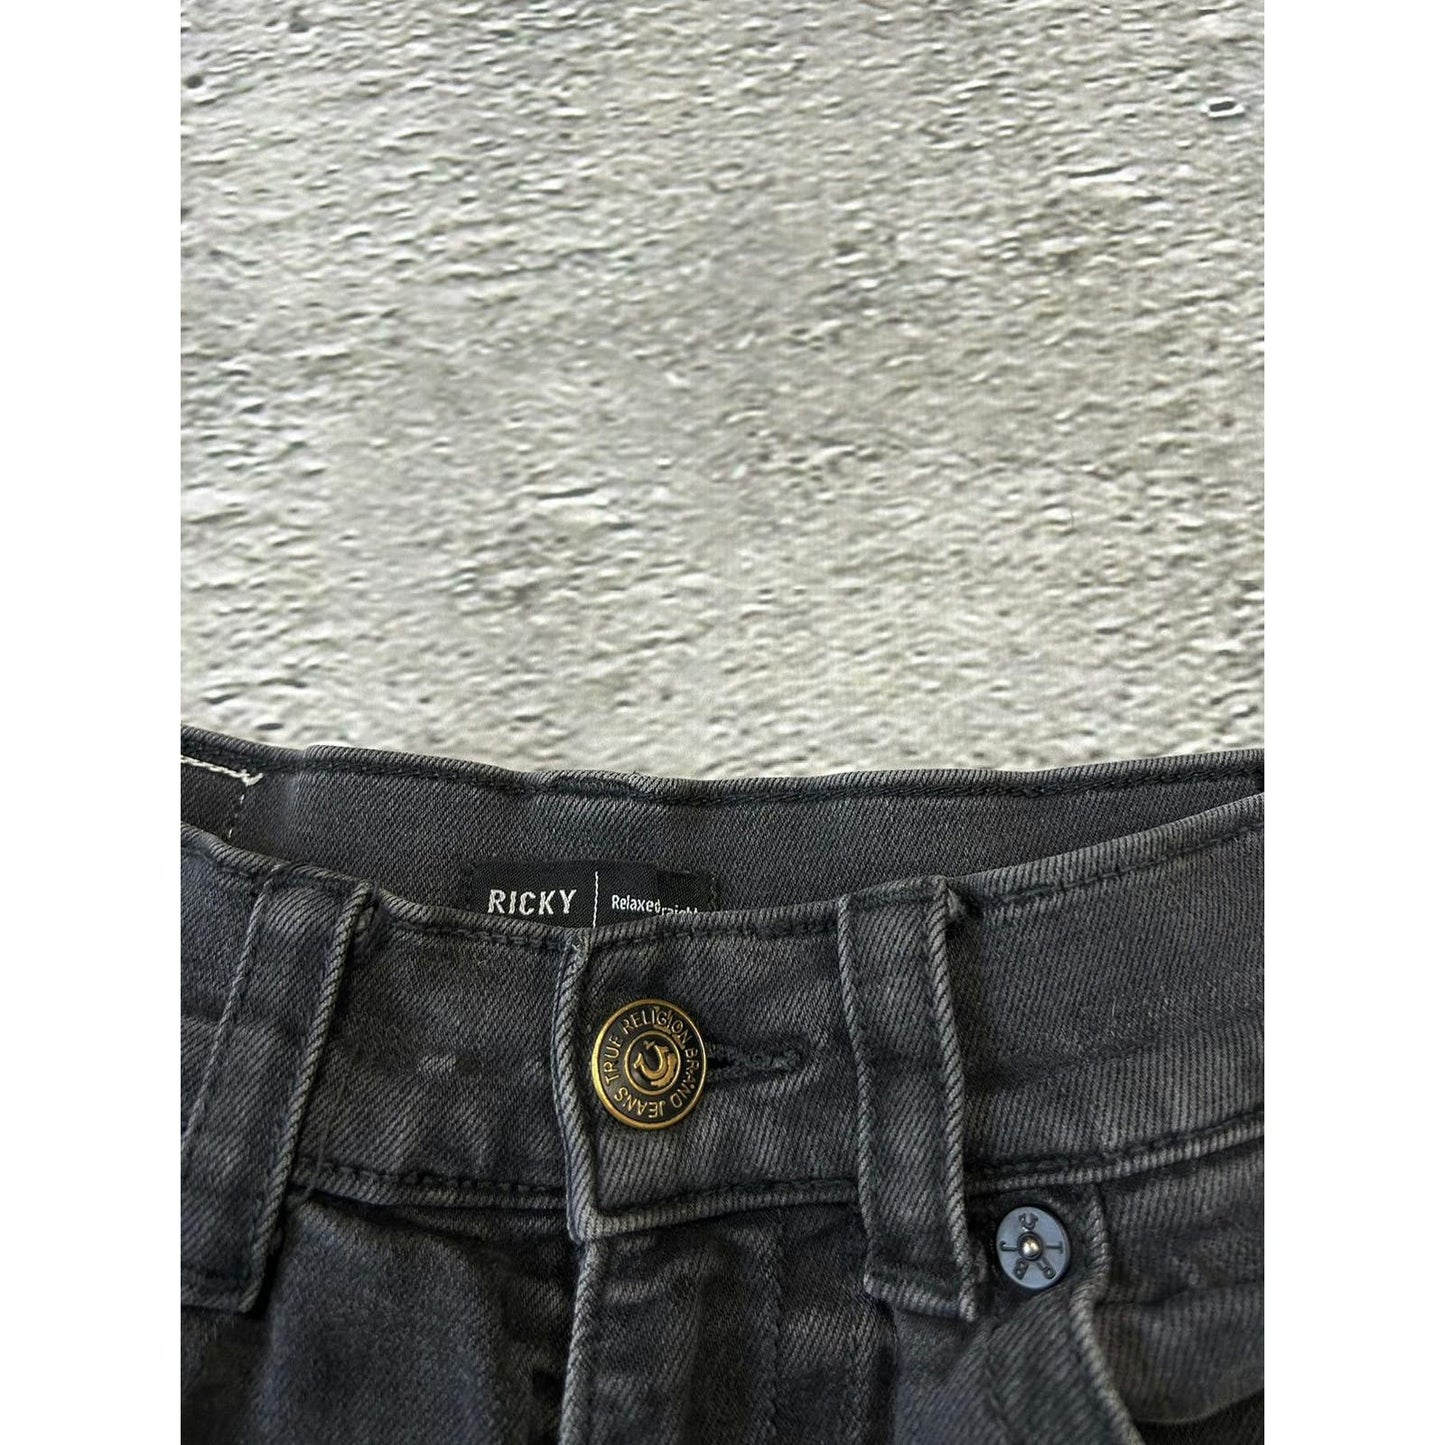 True Religion vintage black jeans denim pants Y2K